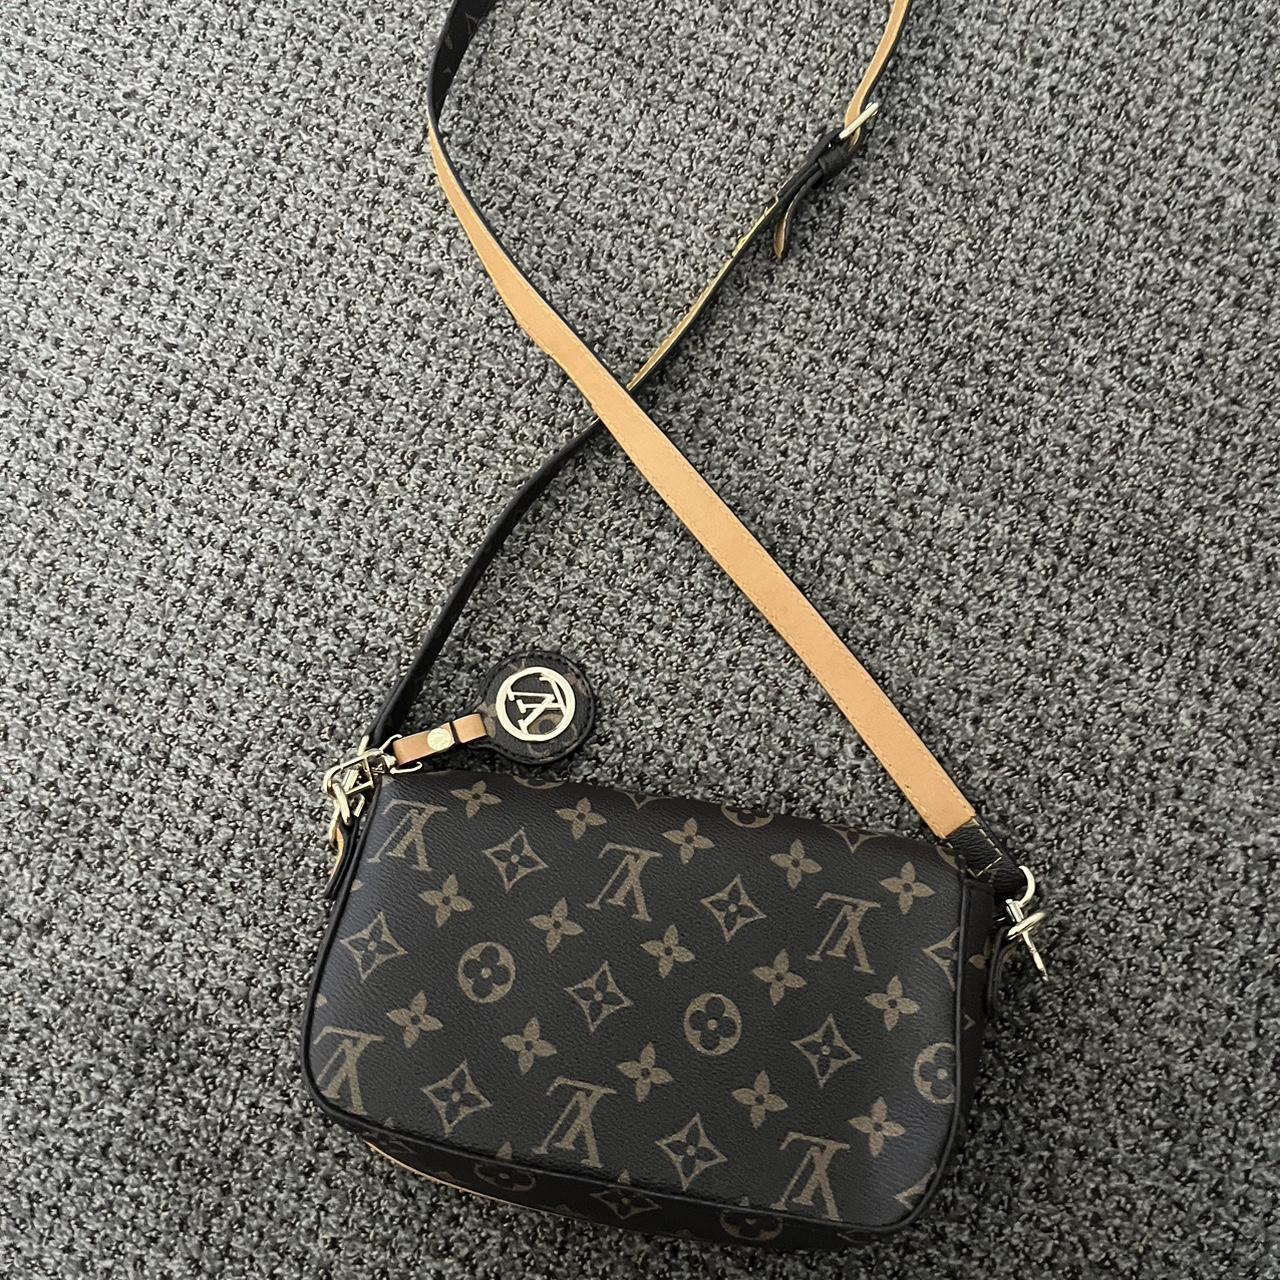 Imitation Luis Vuitton handbag Pink leather with - Depop